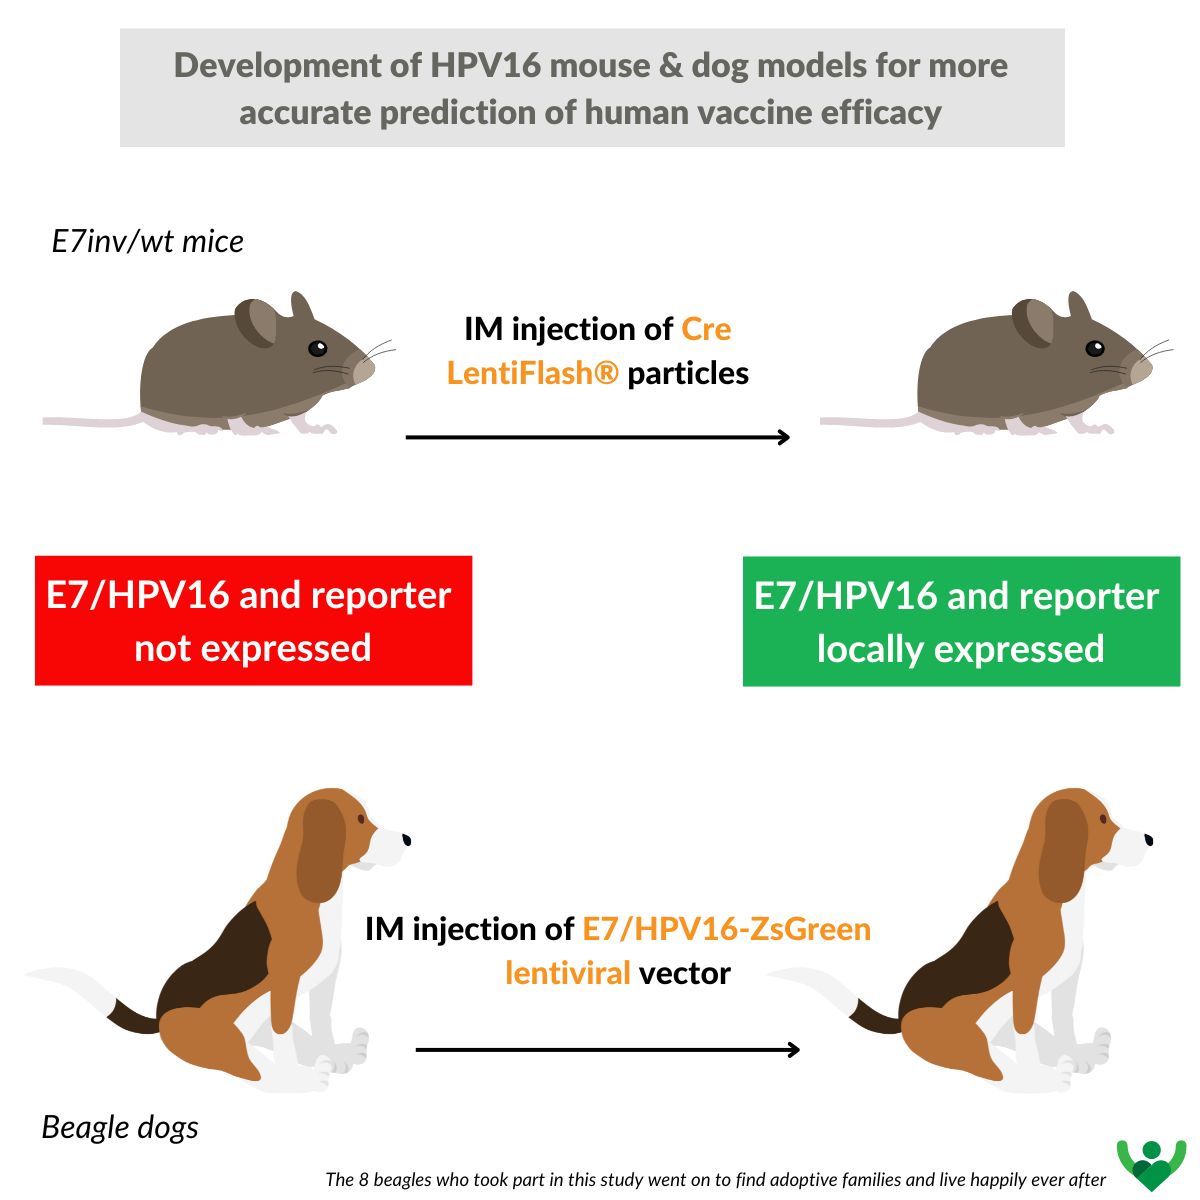 MAGENTA article : HPV16 vaccination & animal models